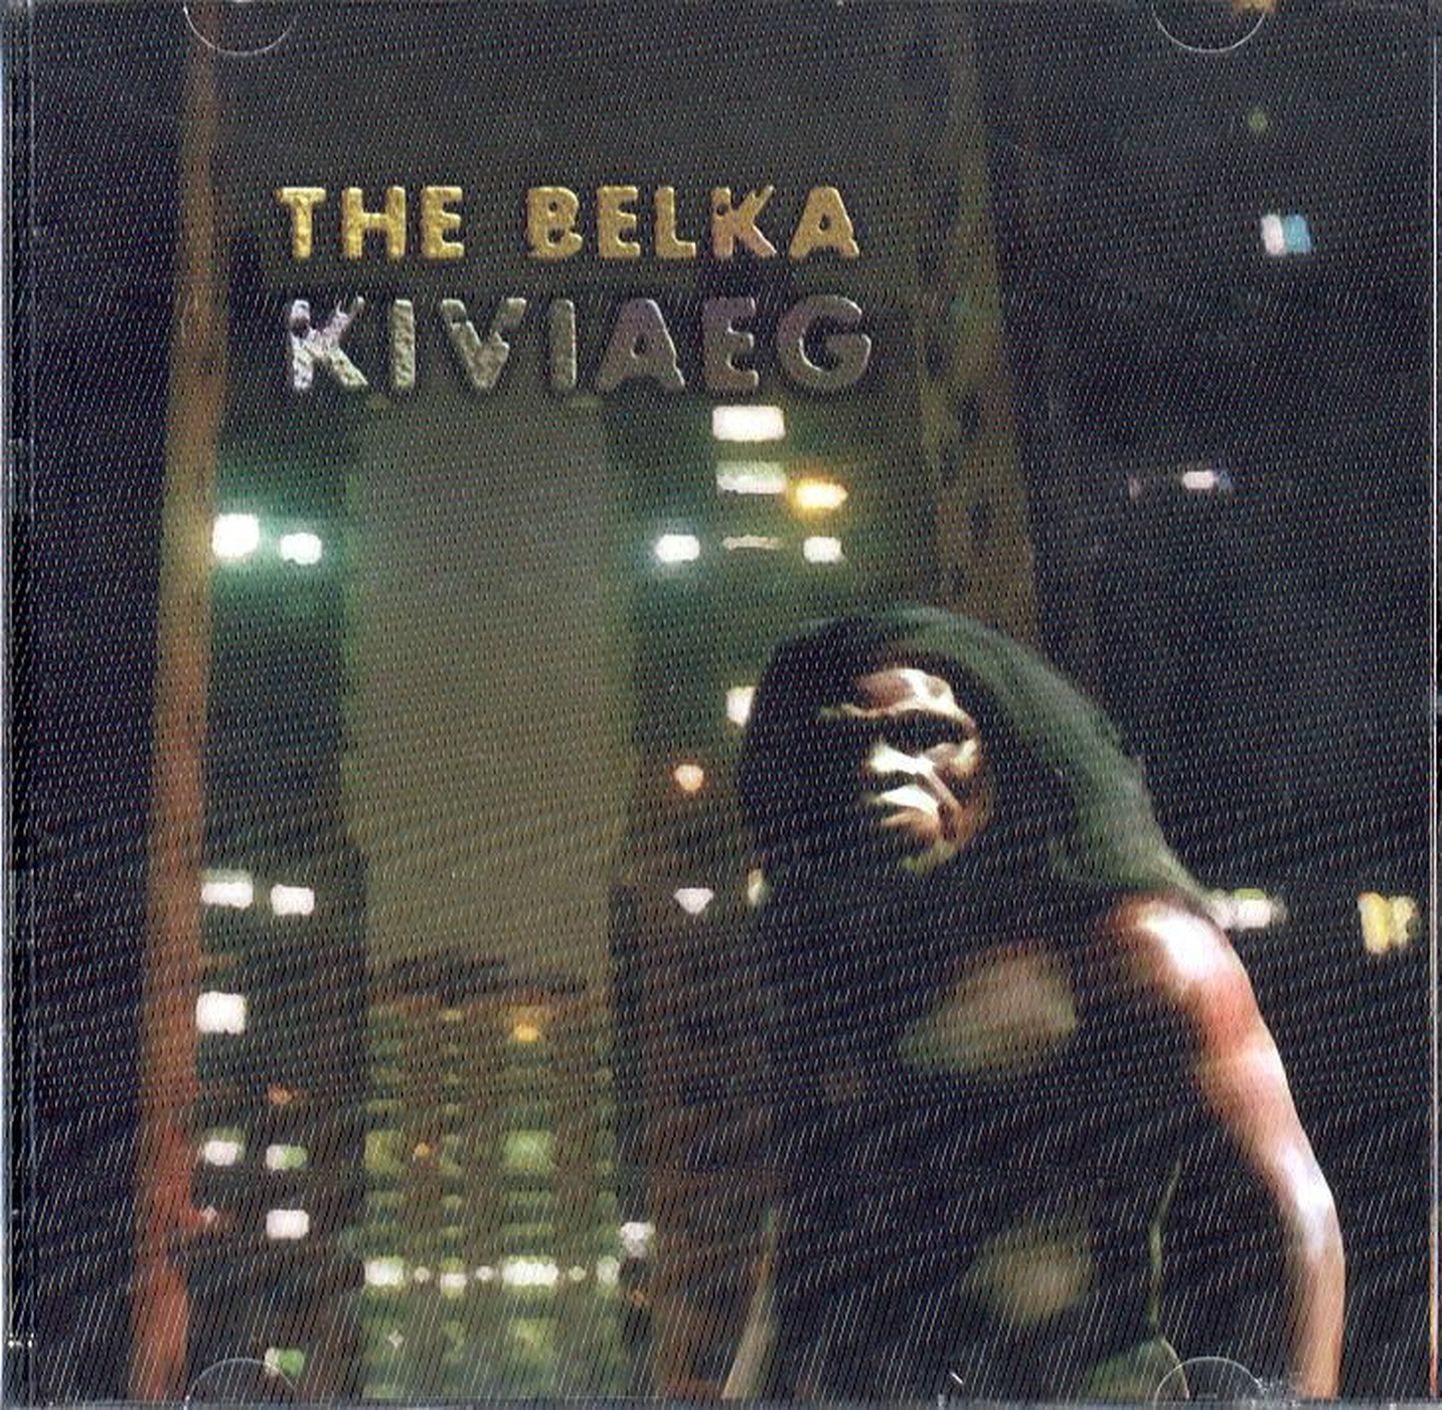 The Belka "Kiviaeg".